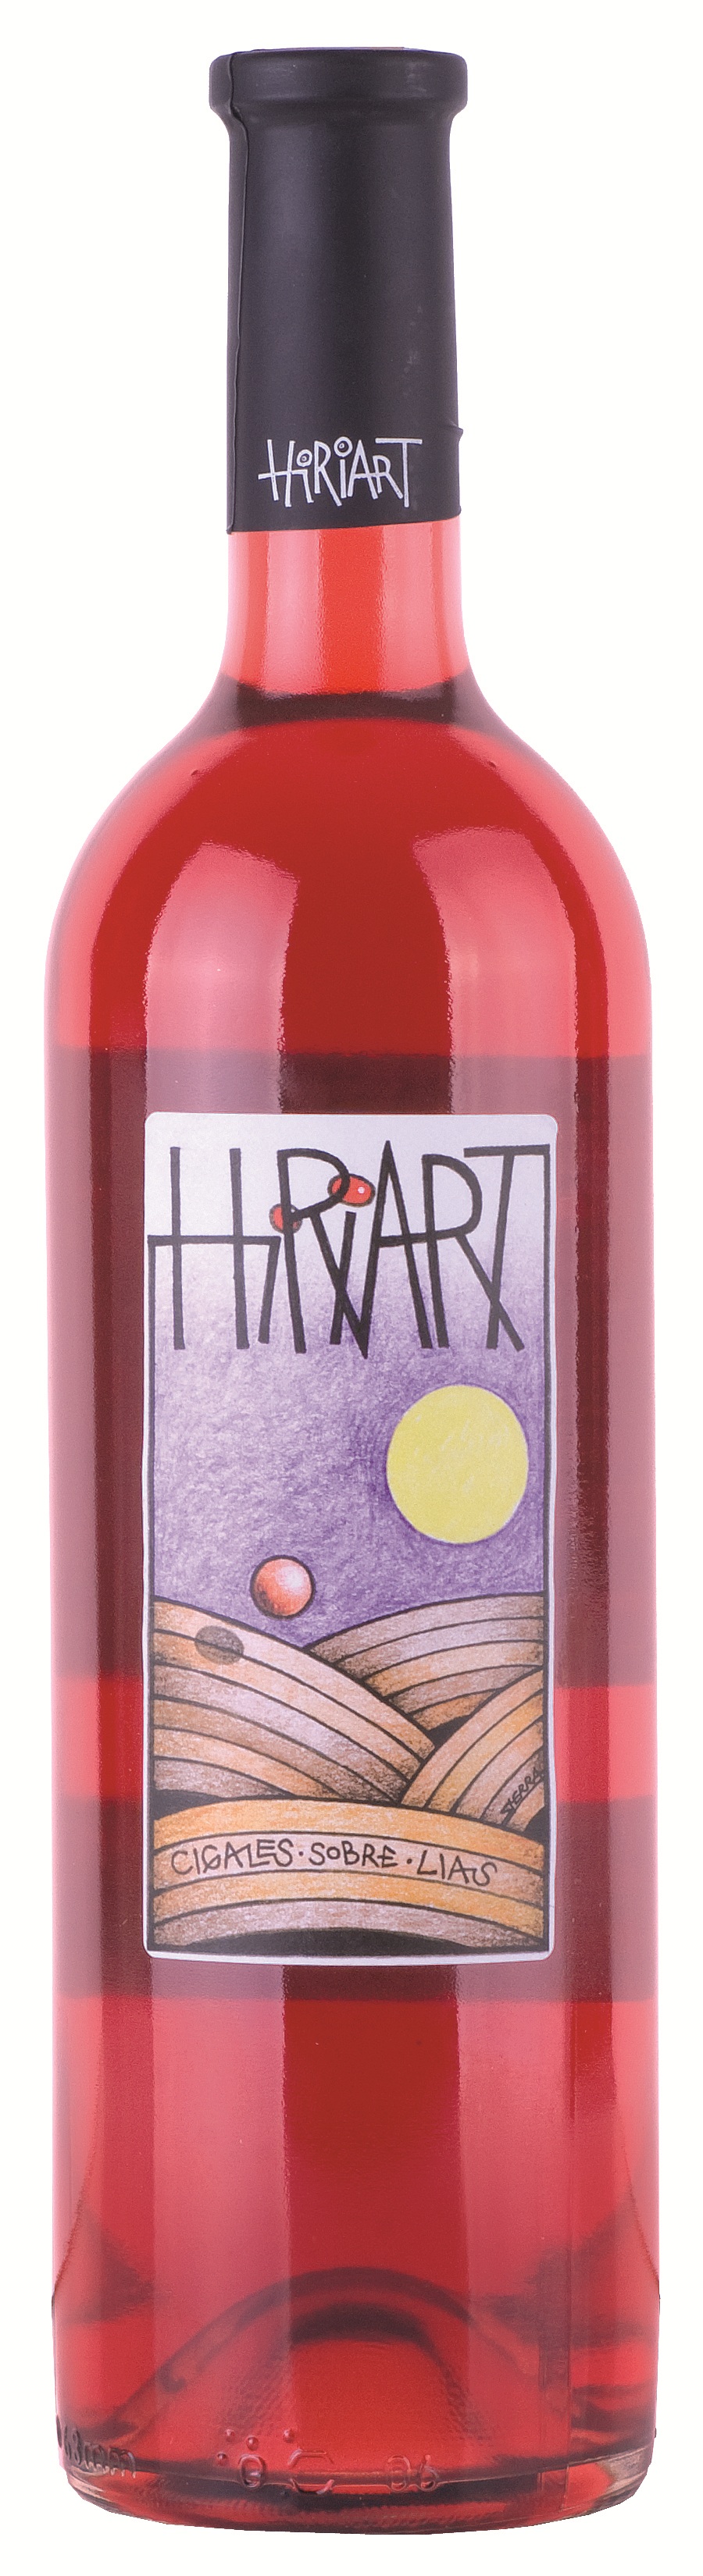 Logo Wine Hiriart Rosado Fermentado en Barrica